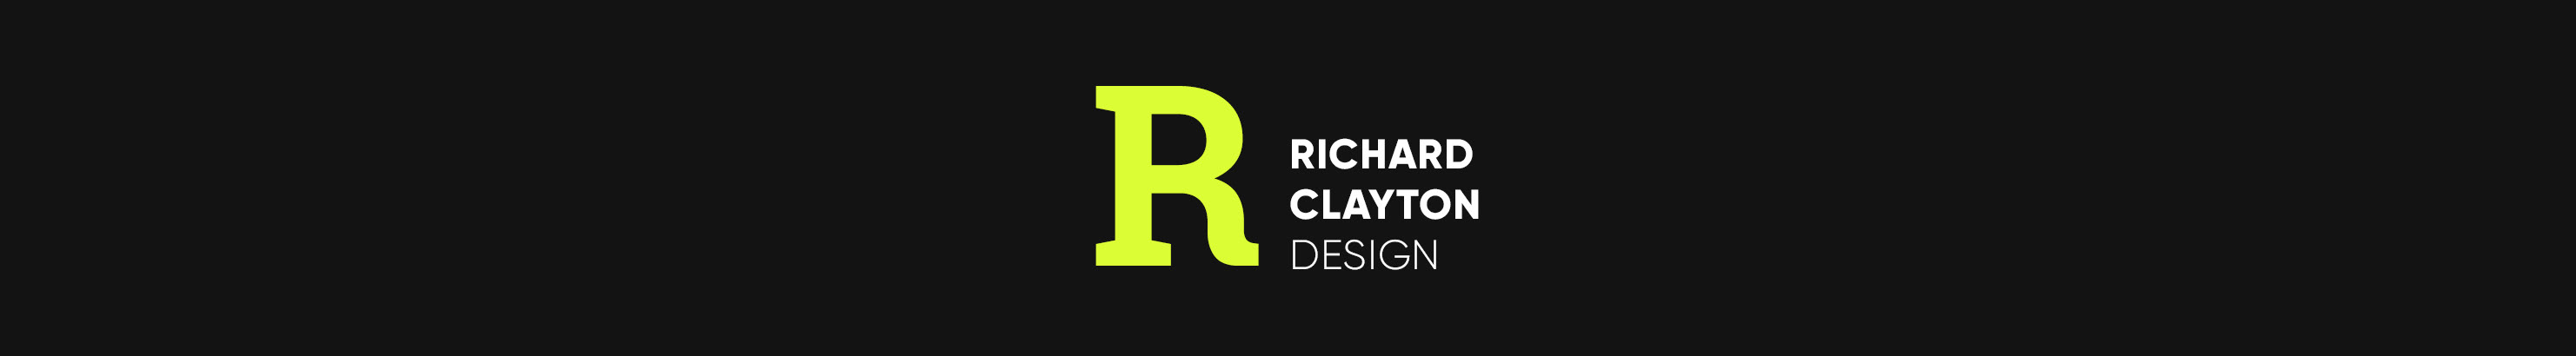 Banner profilu uživatele Richard Clayton